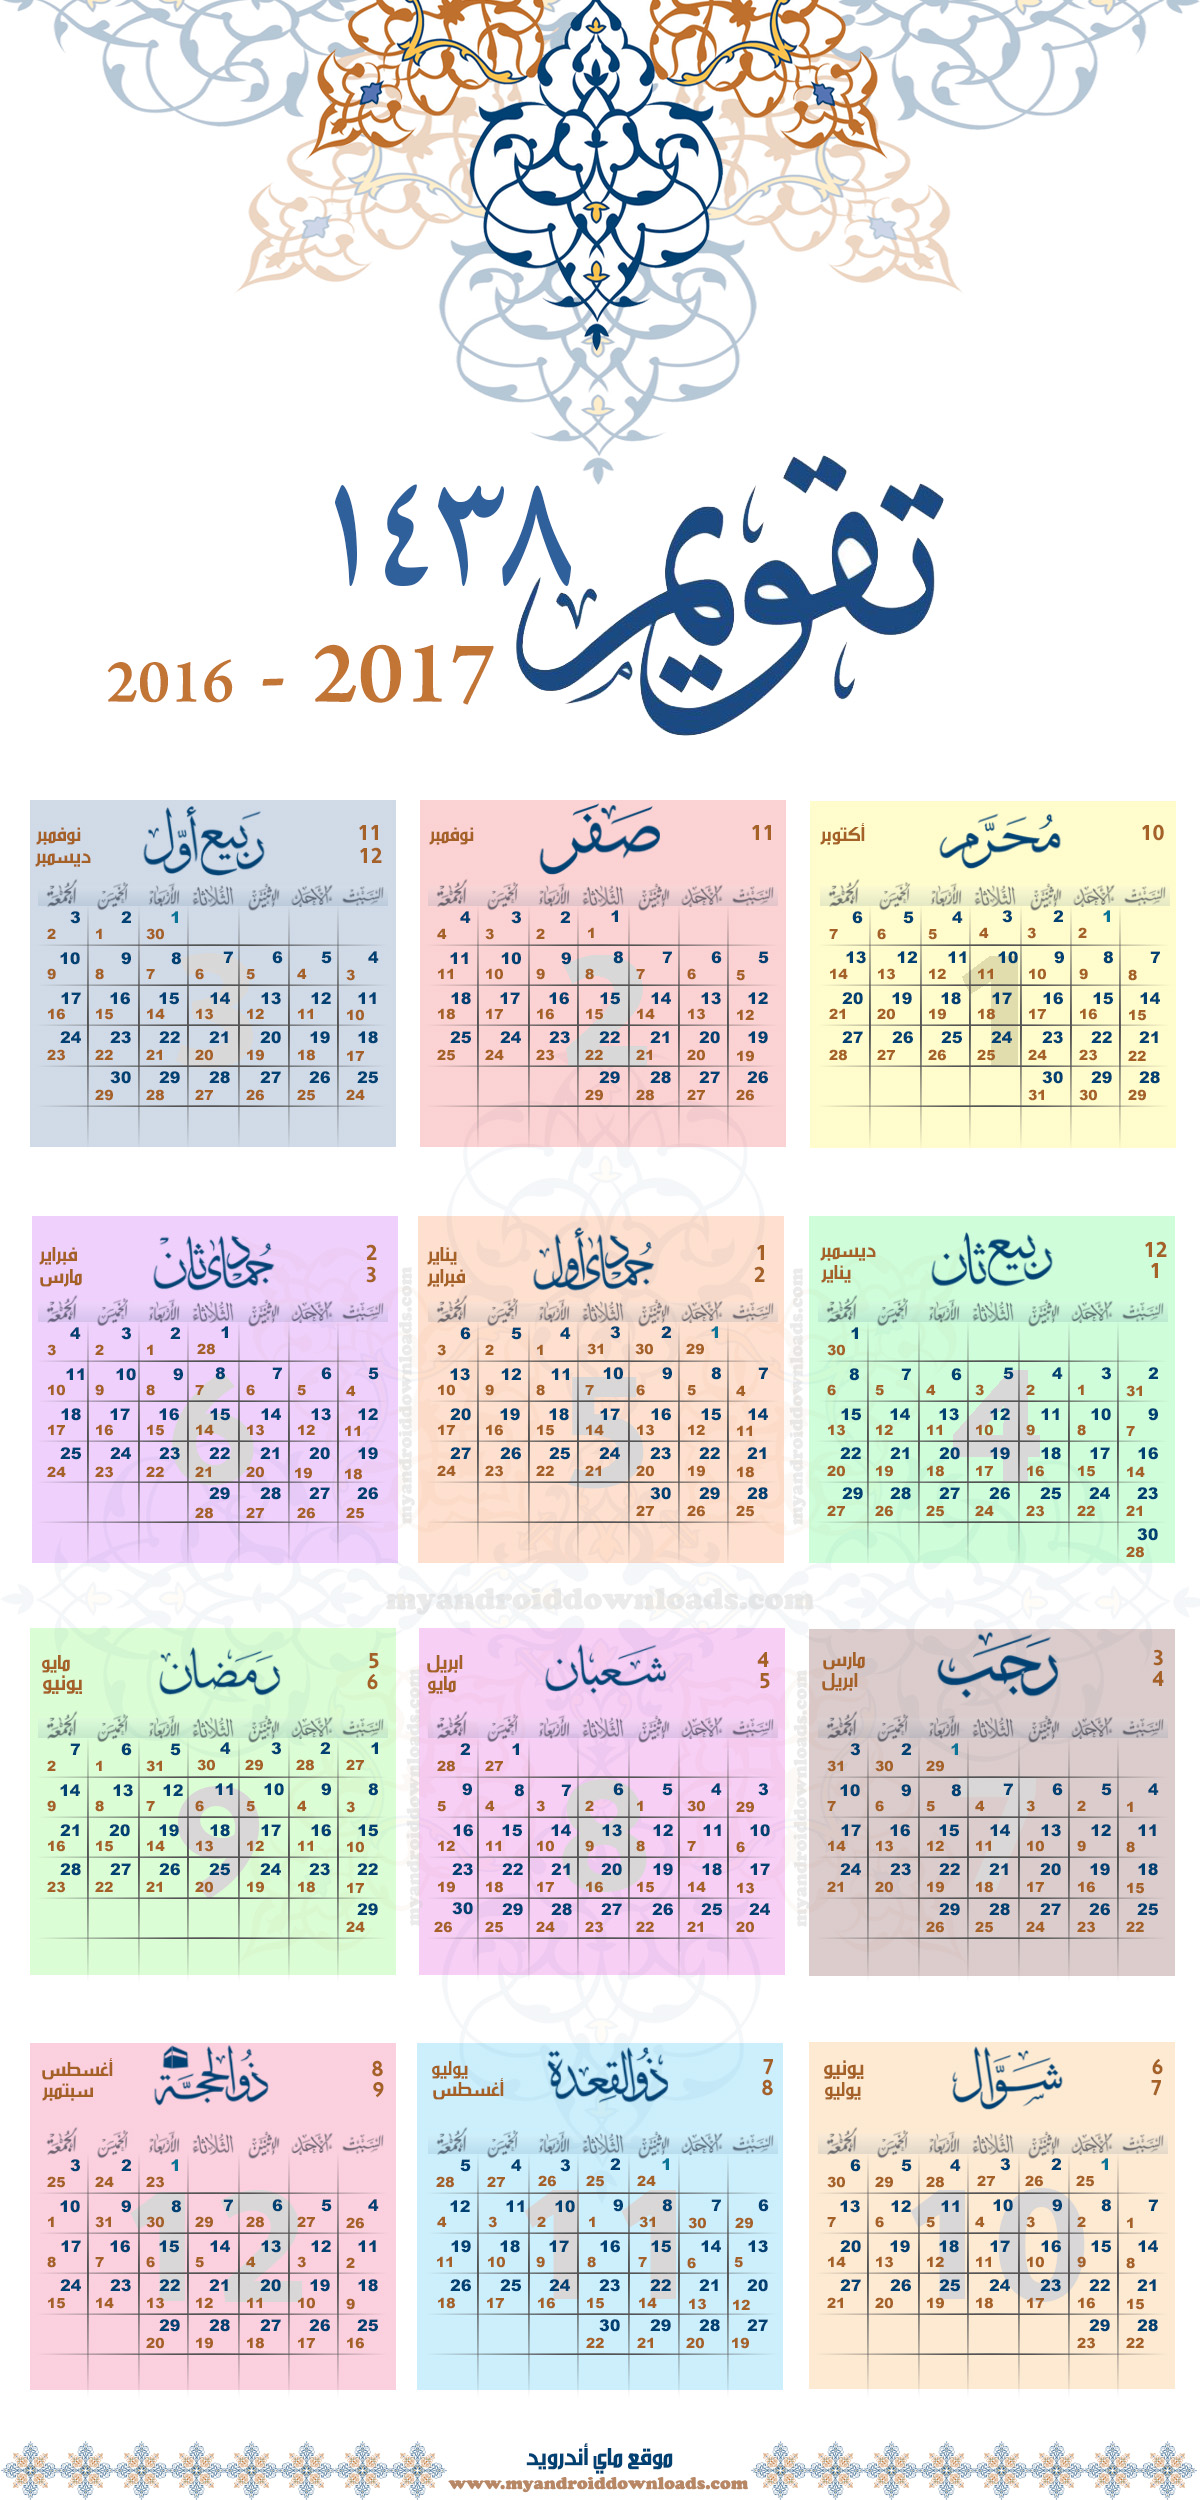 Georgian Date 2018 New 1 Jpg 1000 1000 Calendar Lookbook Inspiration Dating